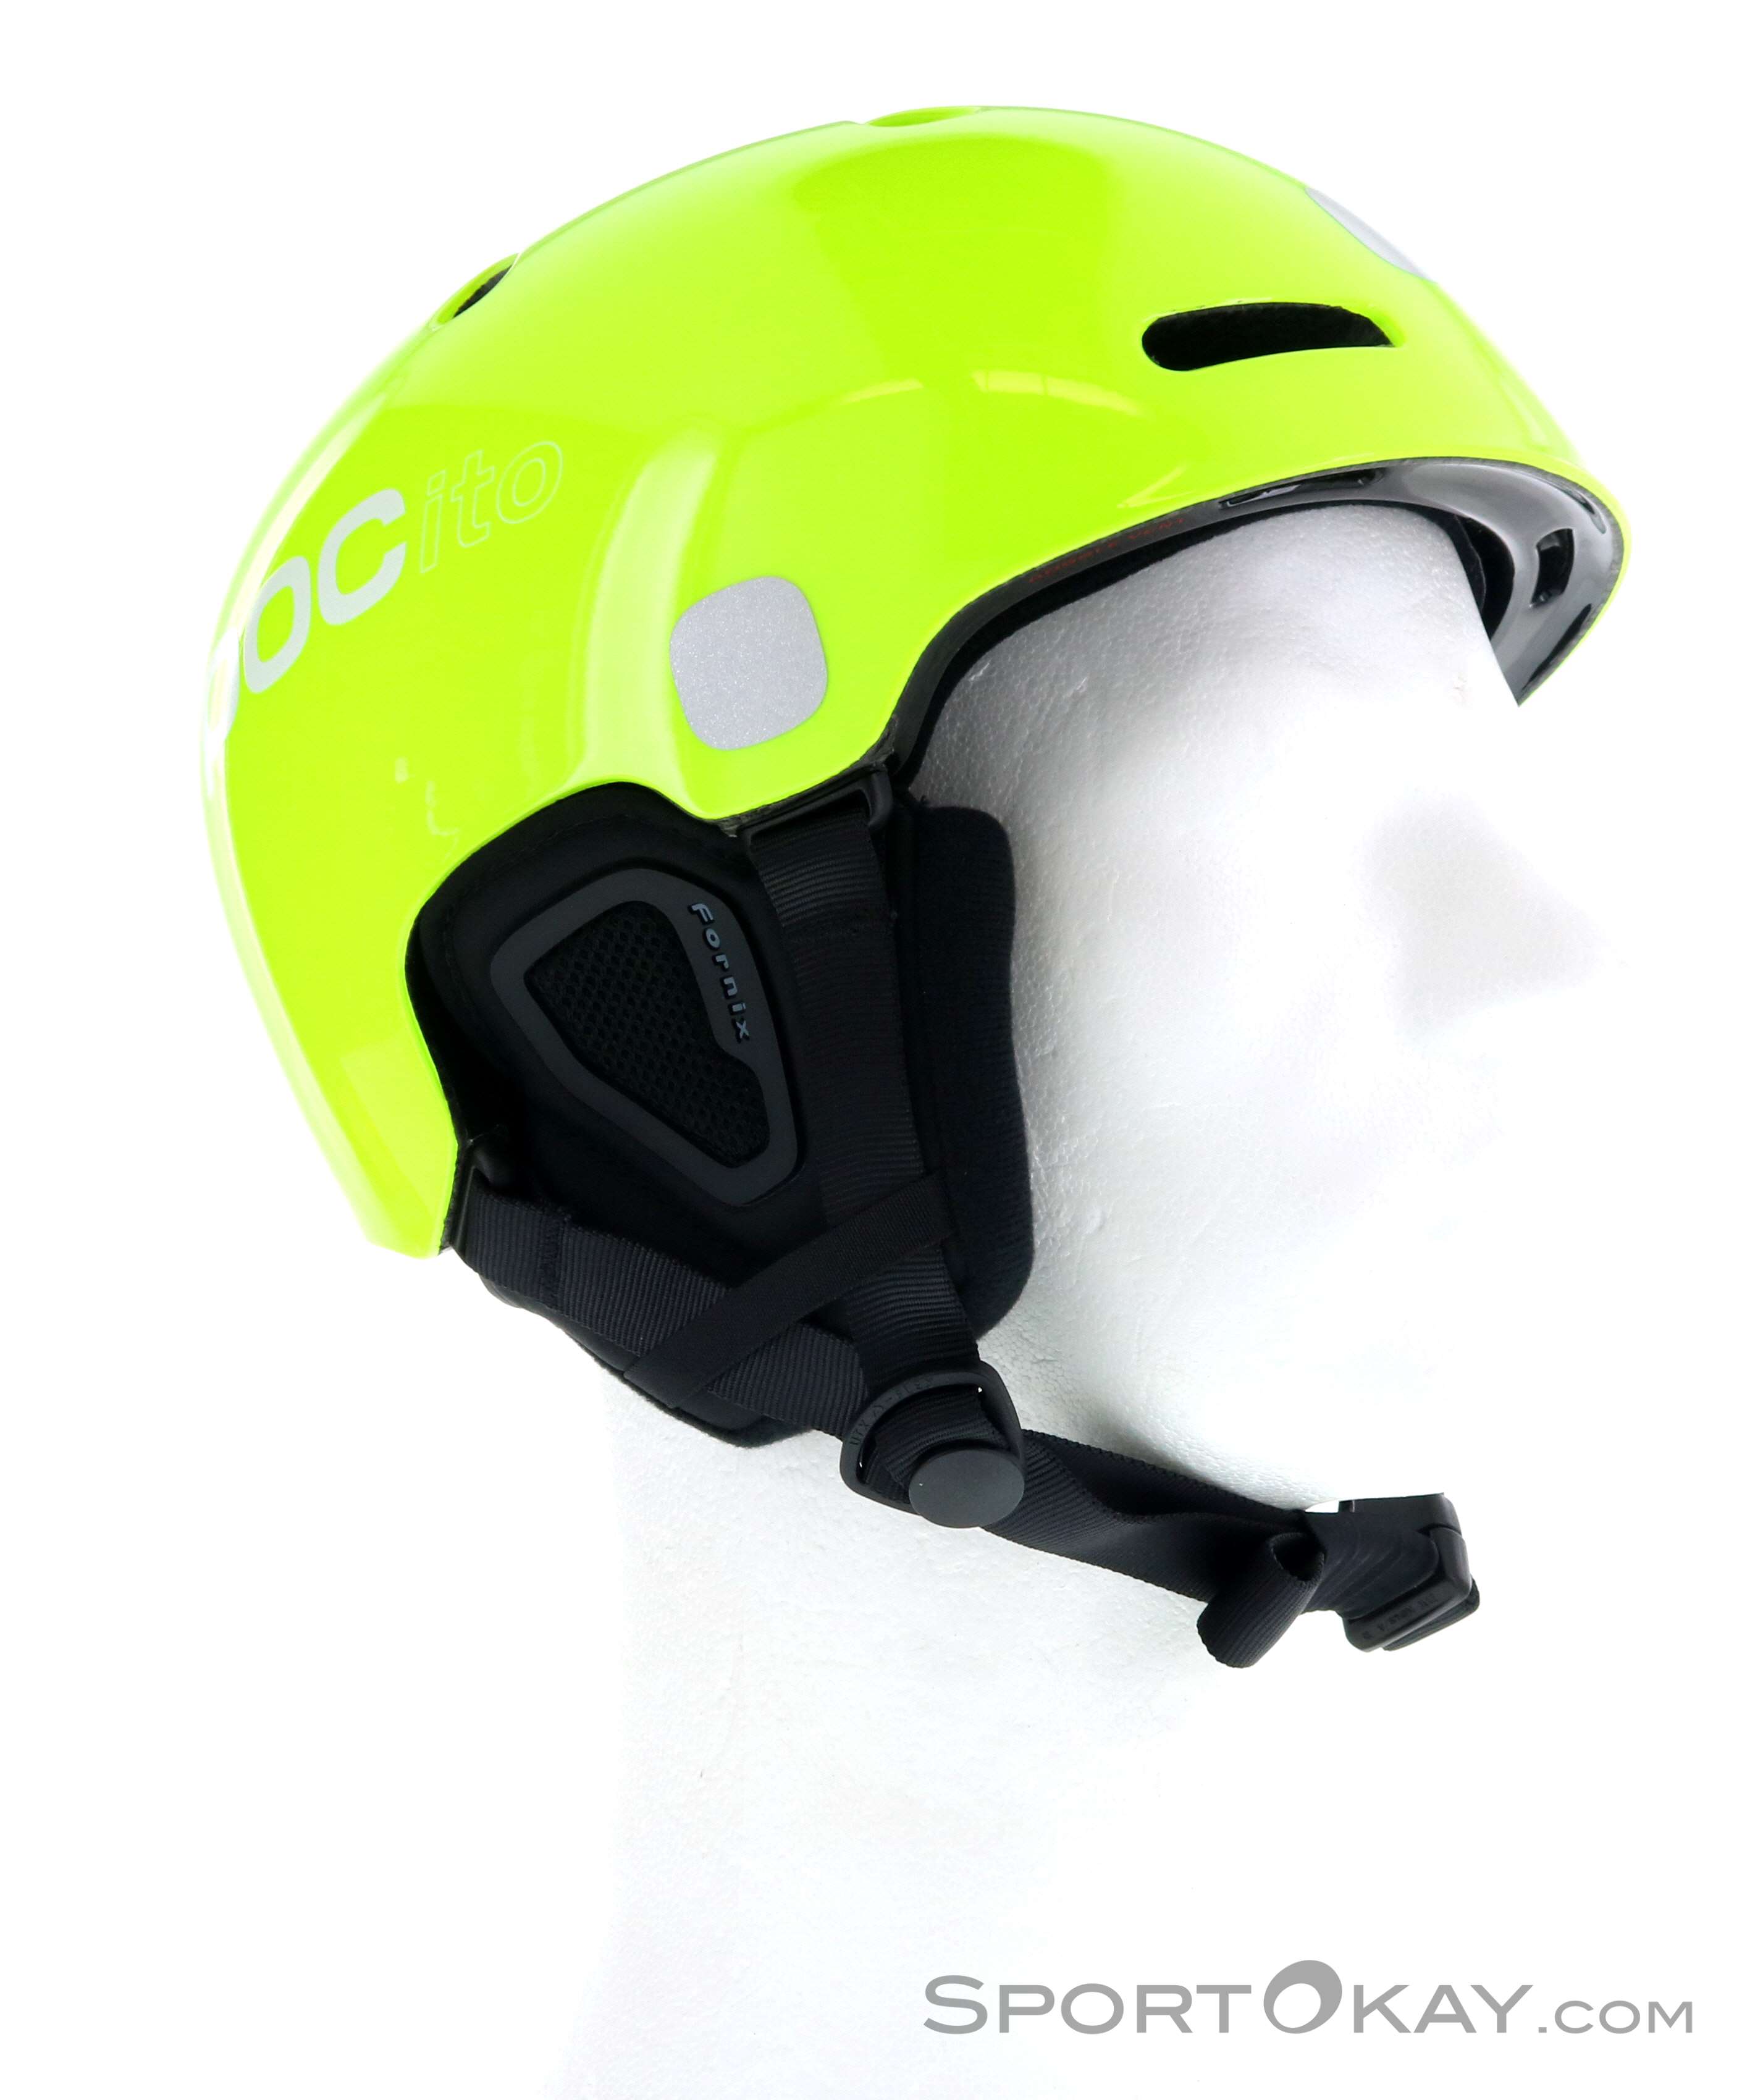 Pocito Fornix Helmet Store, 58% OFF | www.ingeniovirtual.com